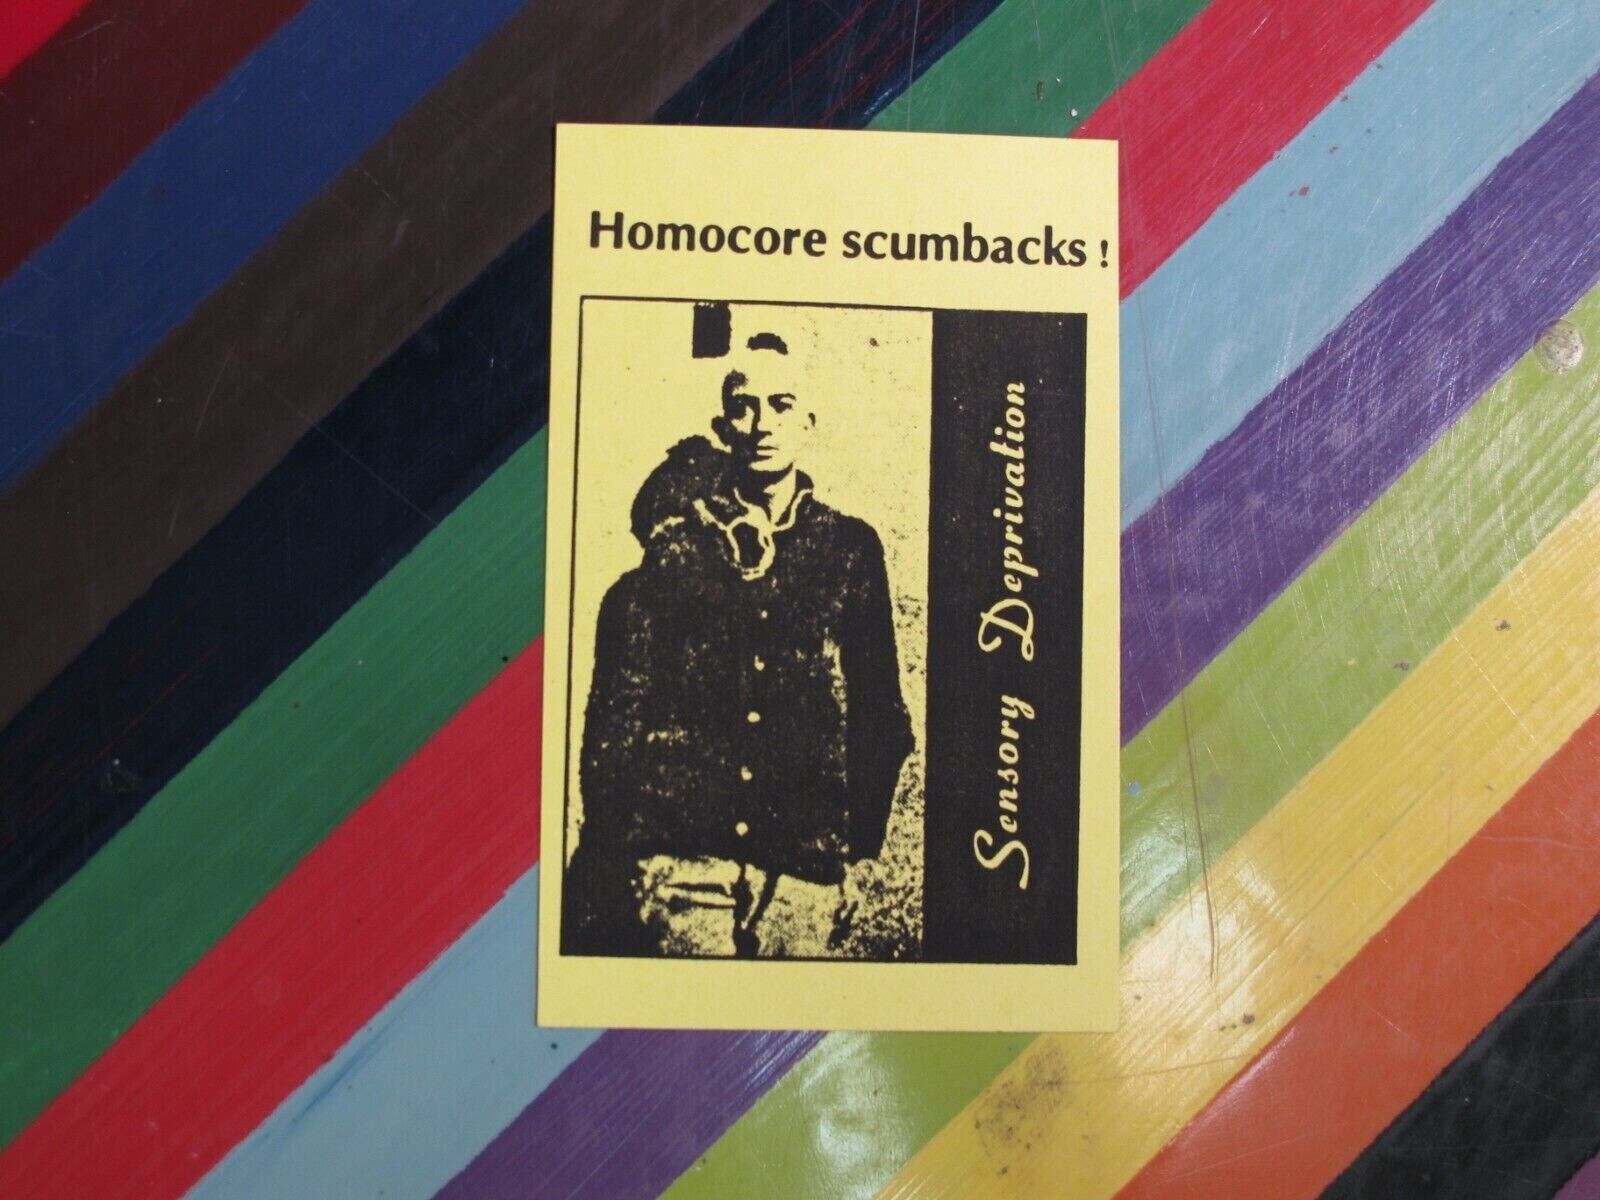 vtg 1990s gay ephemera event flyer - Homocore @ Pyramid Club Sensory Deprivation